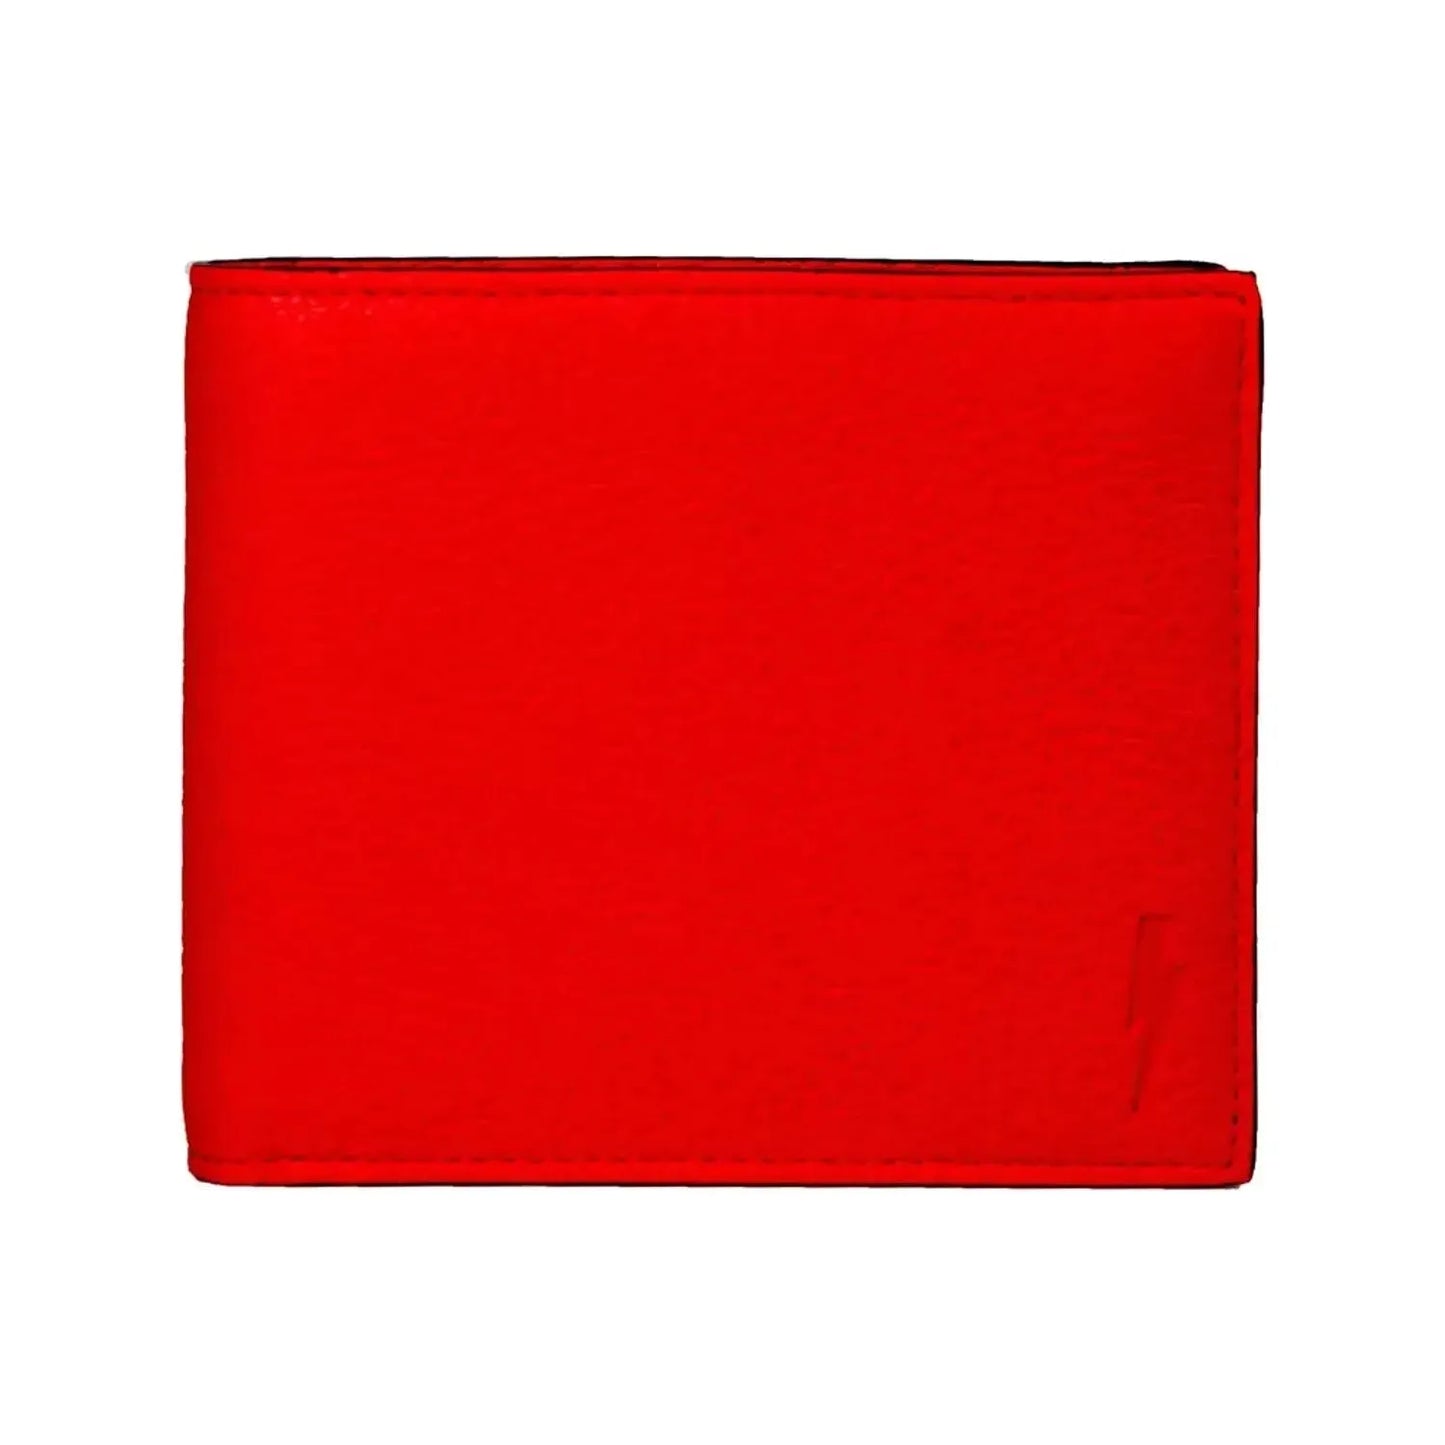 Neil BarrettSleek Red Leather Men's WalletMcRichard Designer Brands£109.00